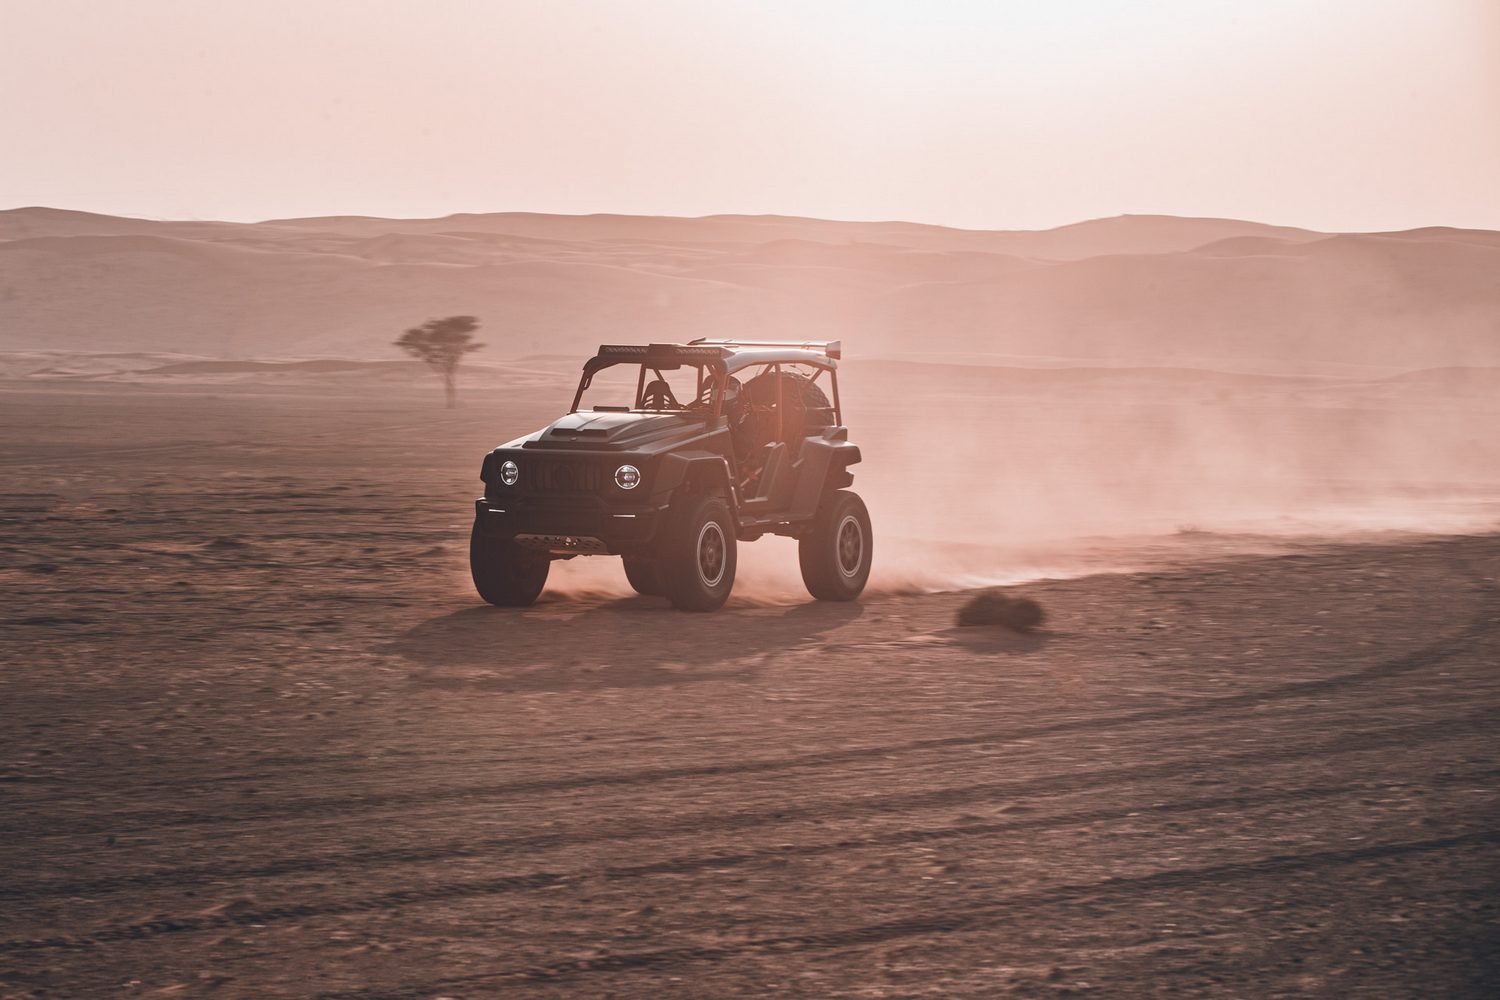 Brabus unveils "ultimate desert dunes racer"